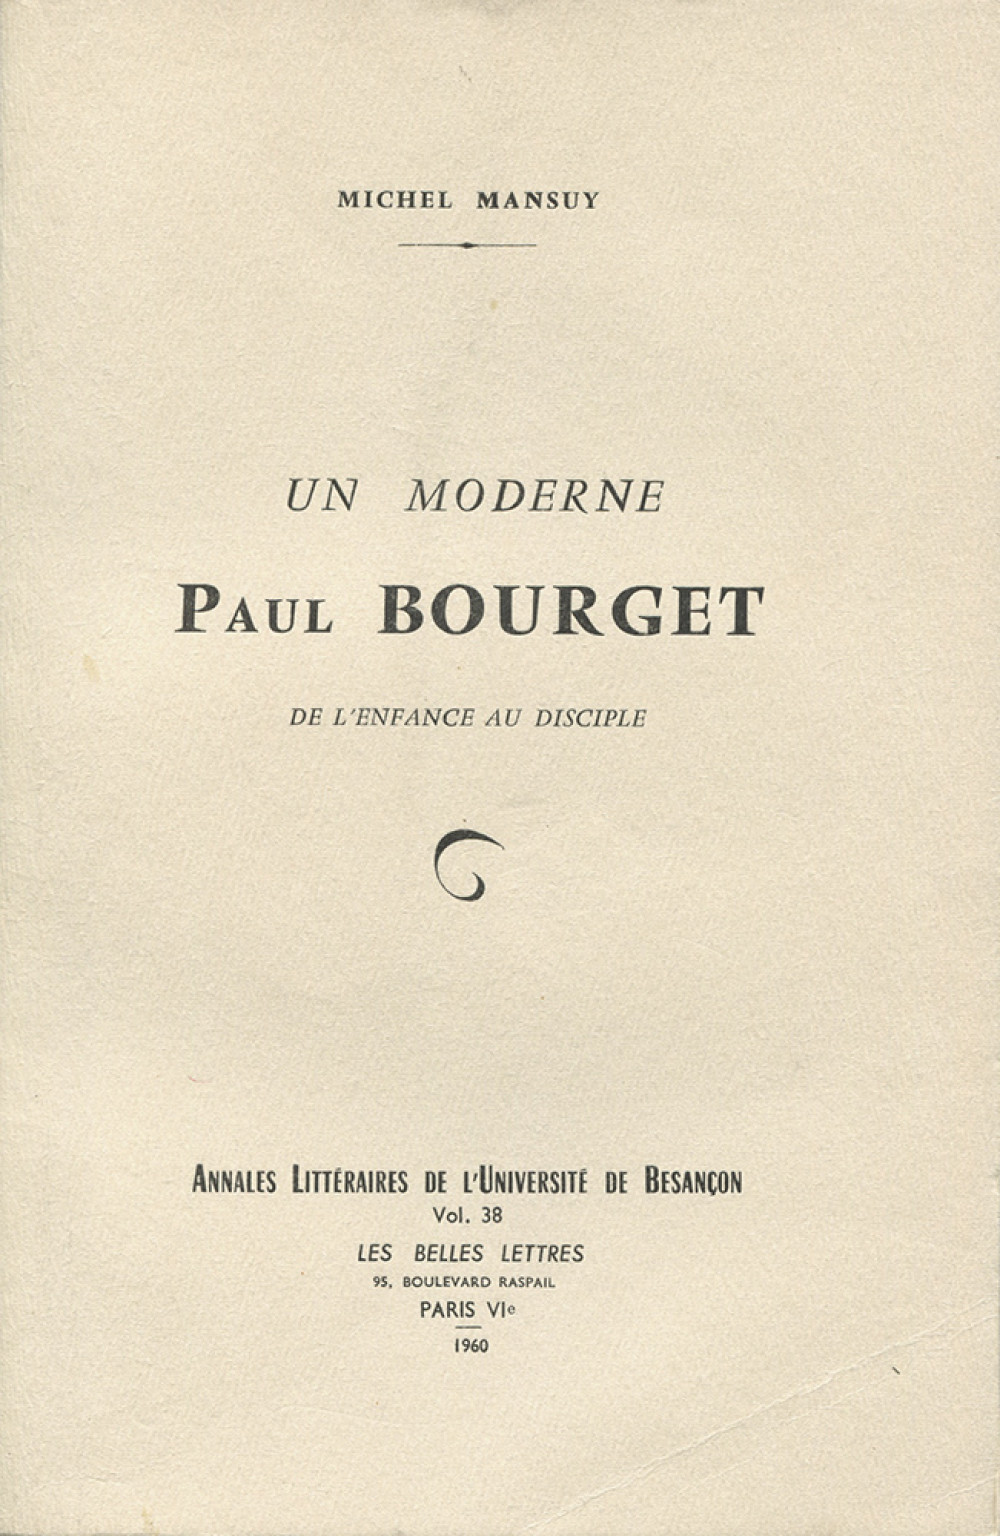 Un moderne Paul Bourget